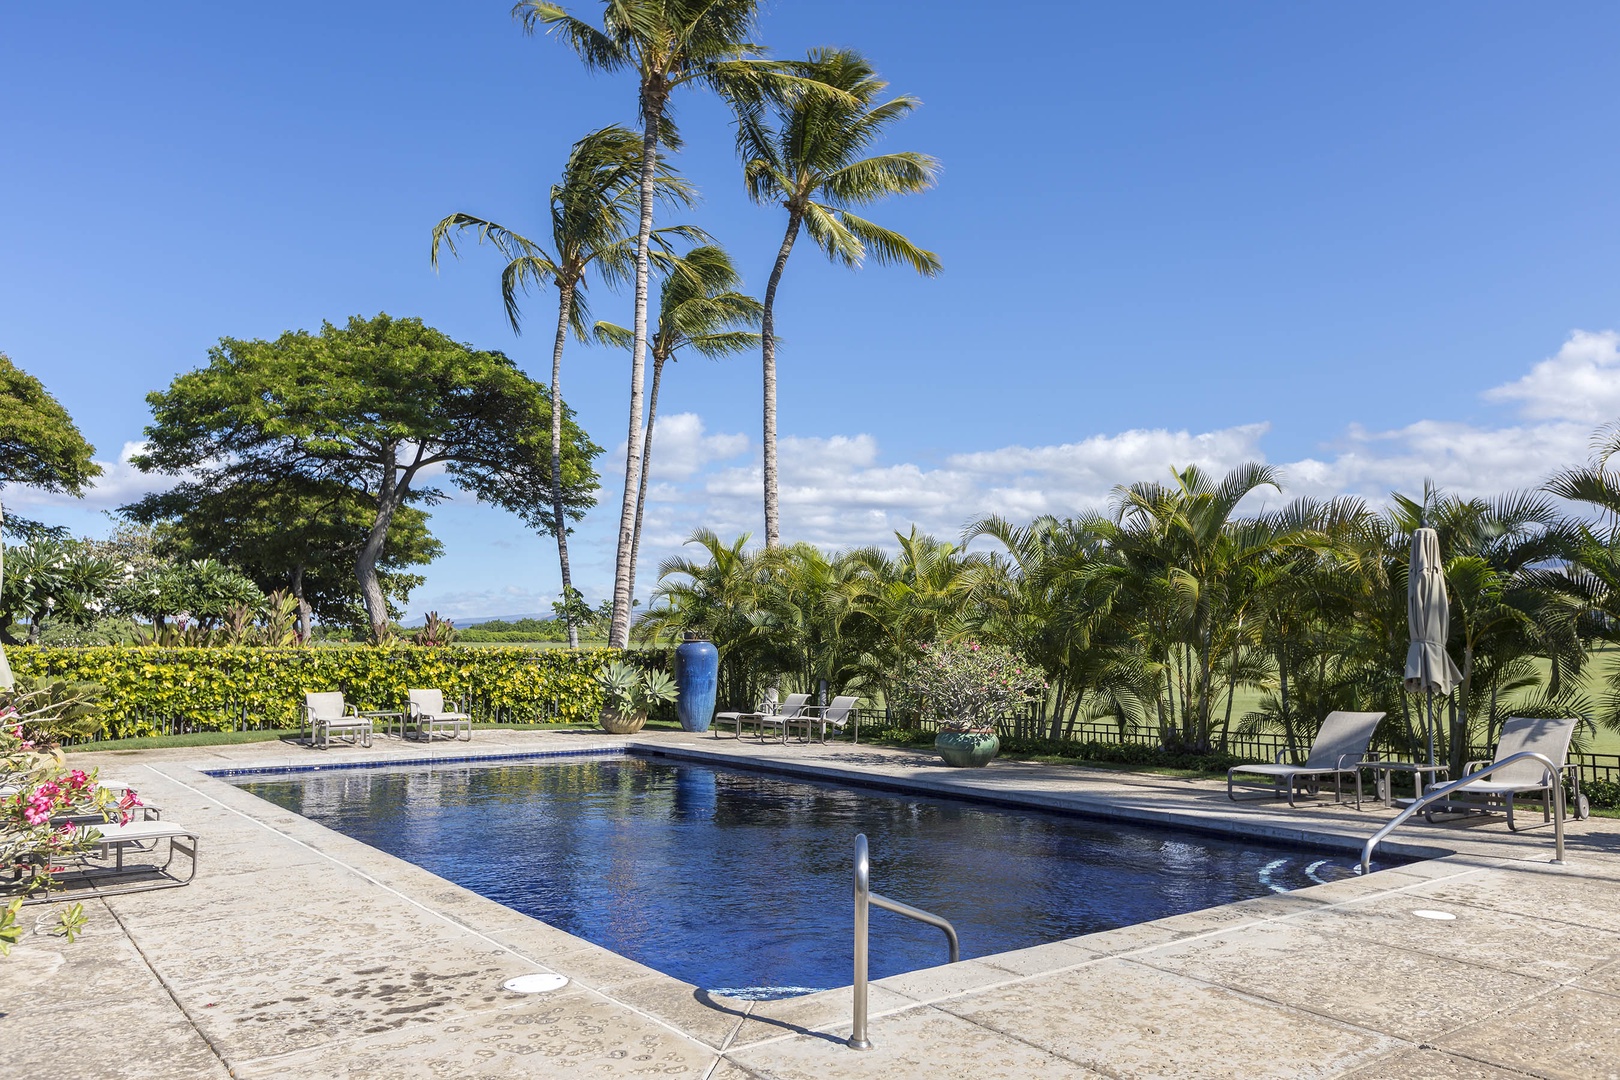 Kailua Kona Vacation Rentals, Hillside Villa 7101 - Community Pool, just use the house key for access